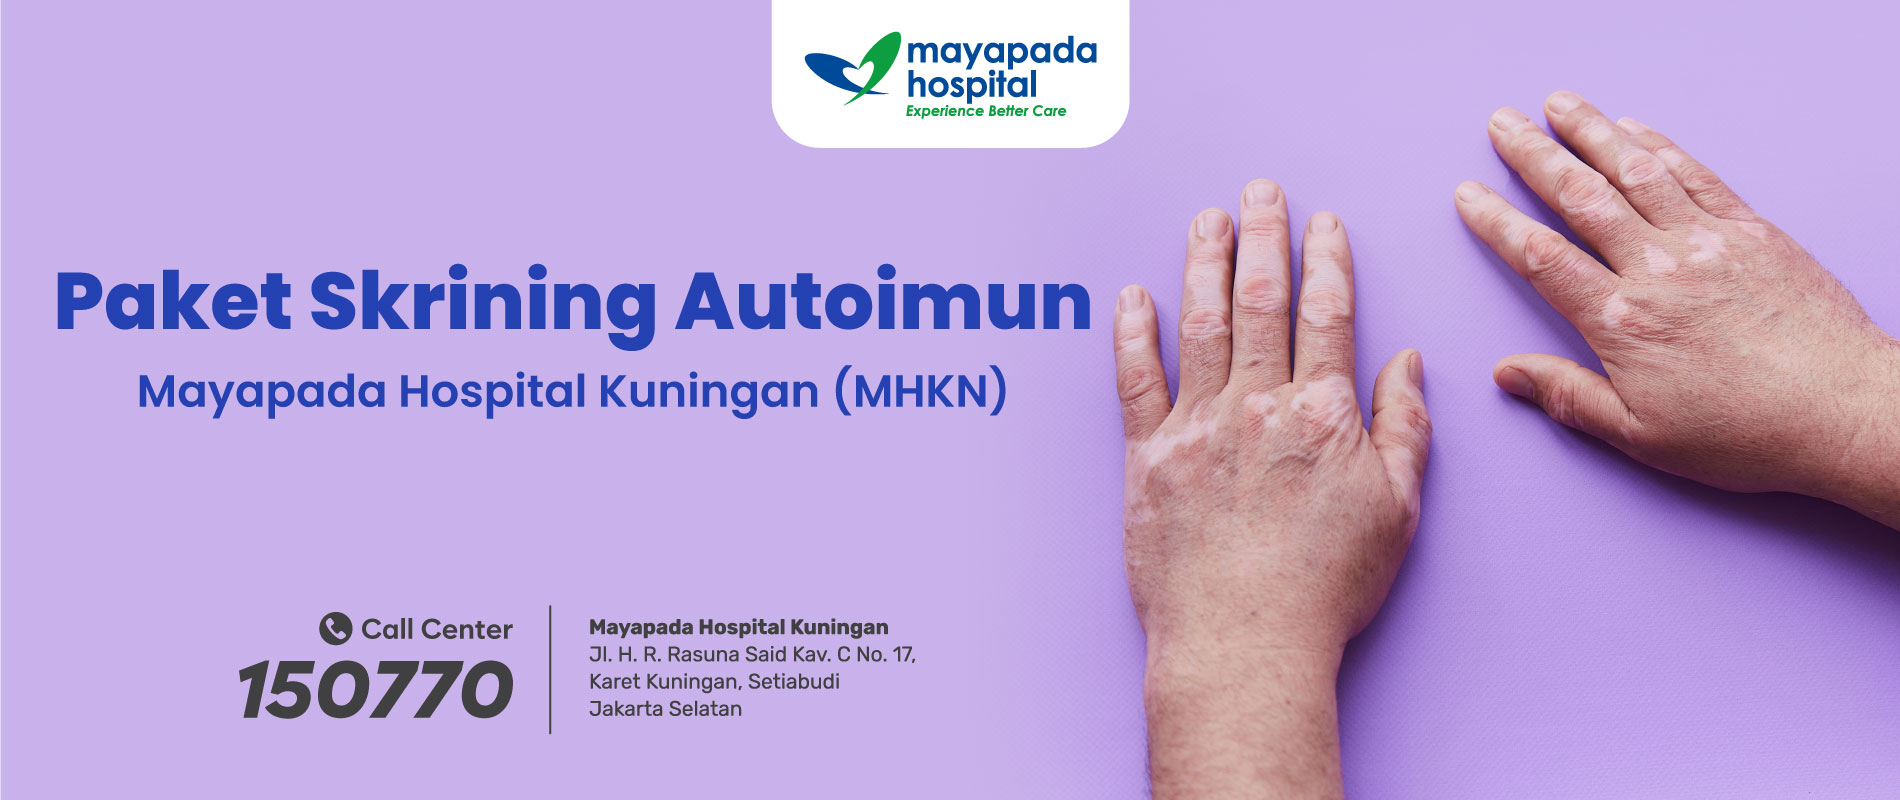 Paket Skrining Autoimun di Mayapada Hospital Kuningan (MHKN) IMG